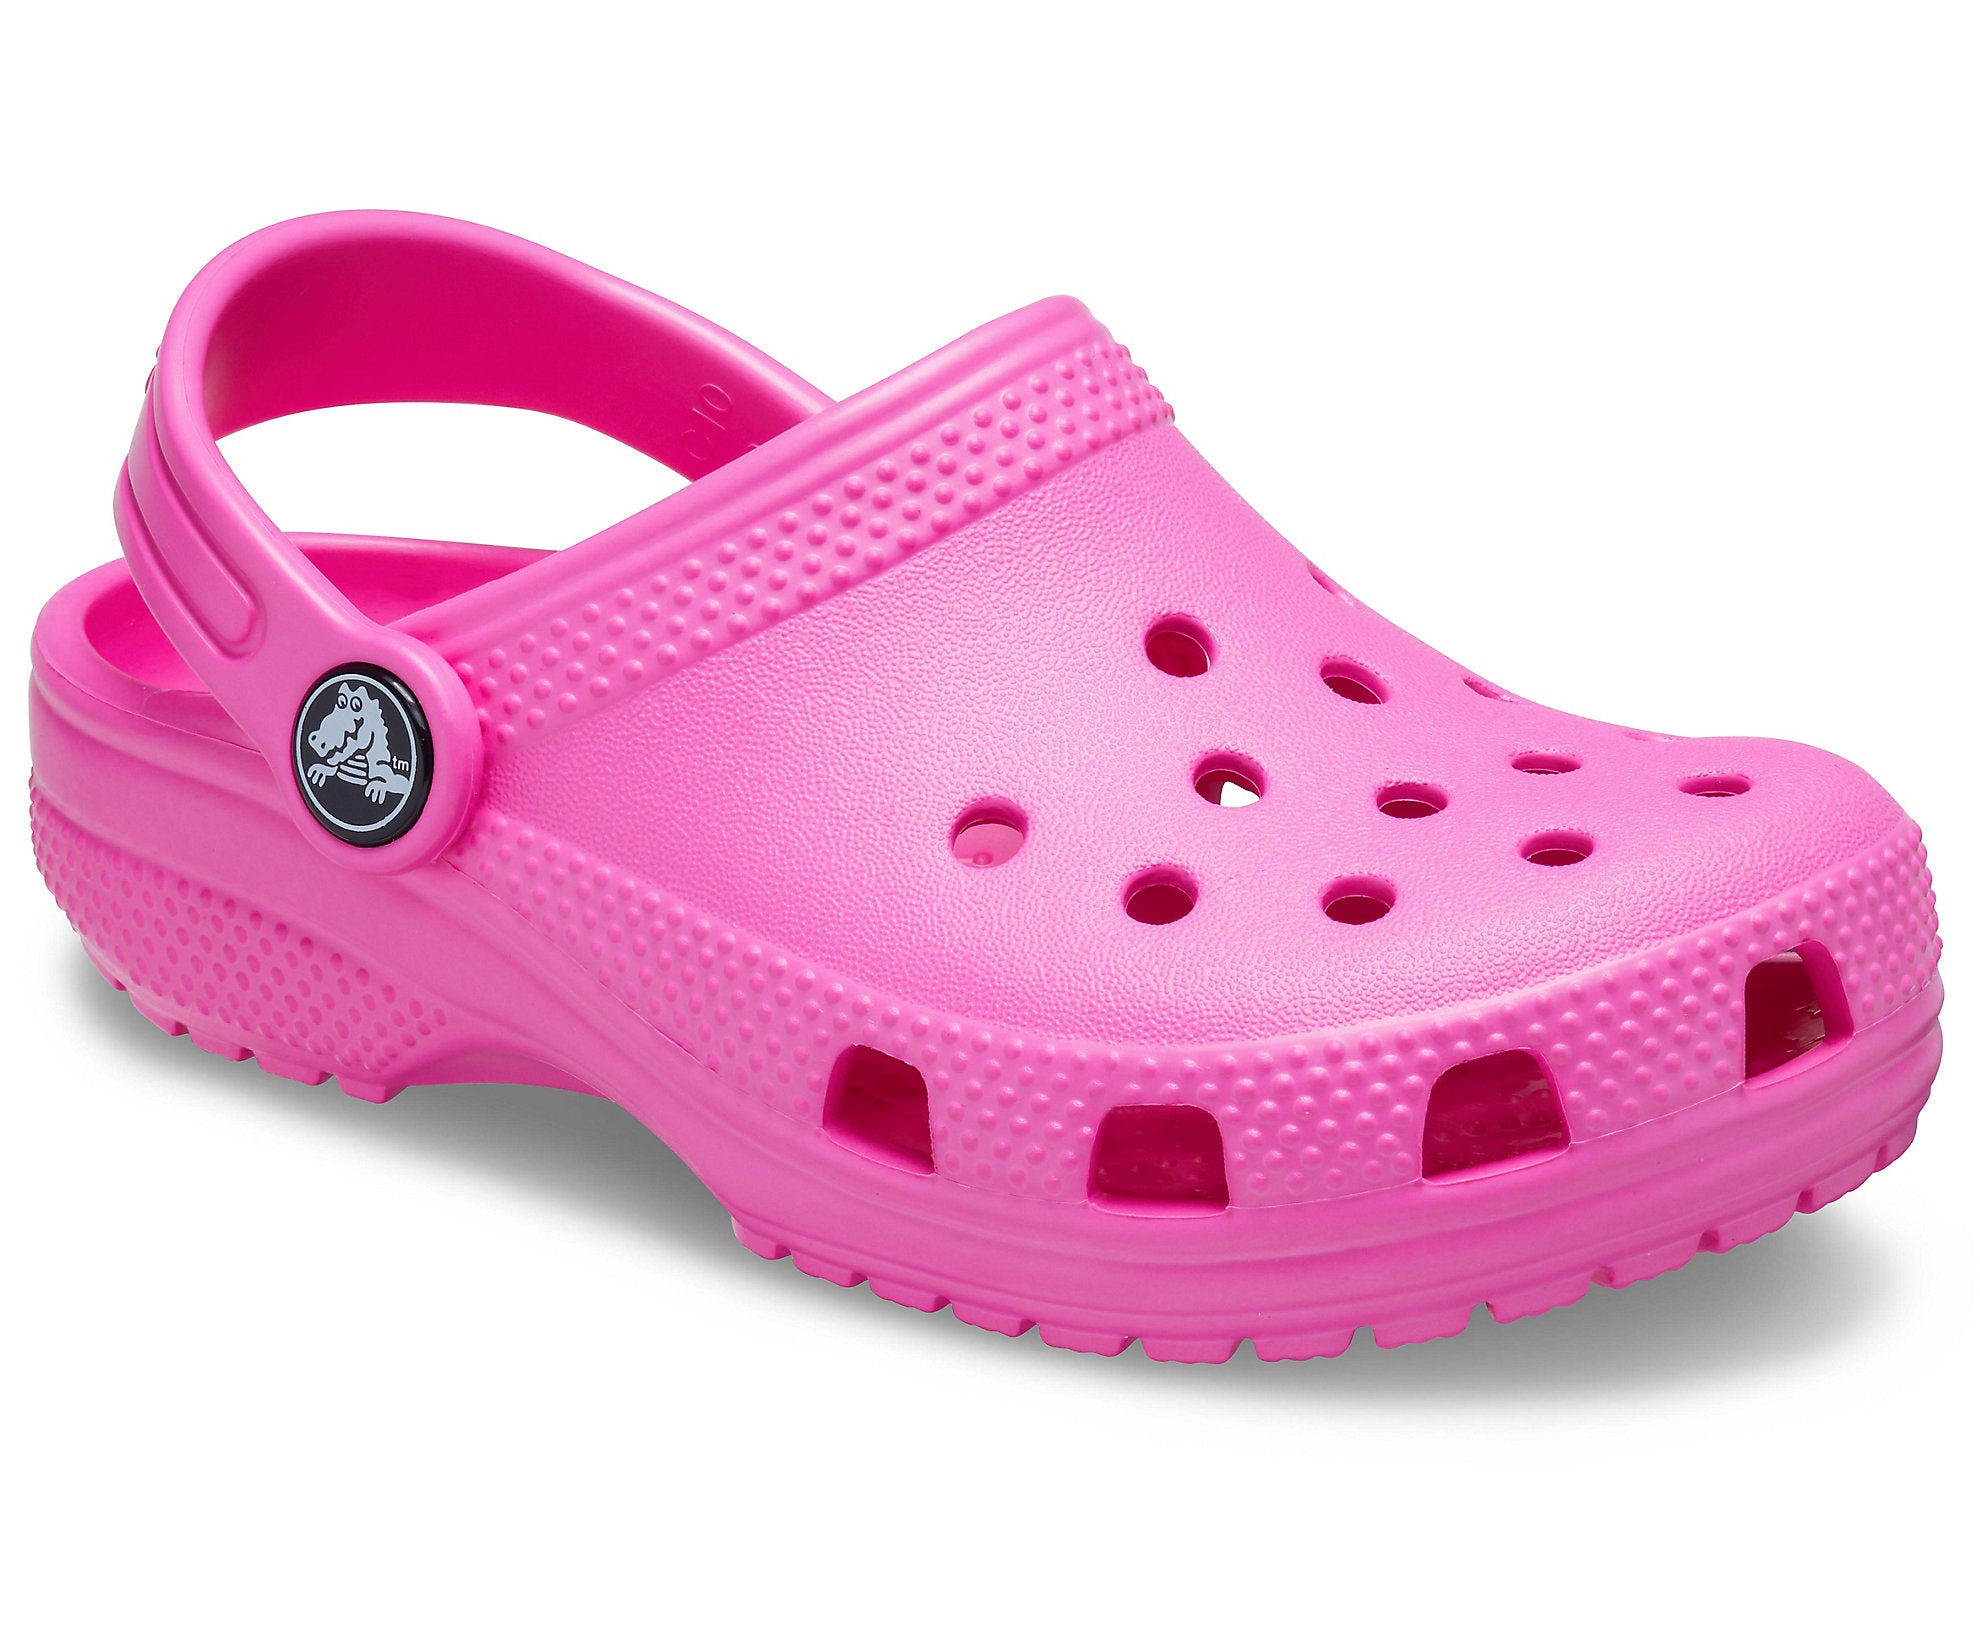 Crocs Kids Classic electric pink EVA mule sandal slip-on clog #204536